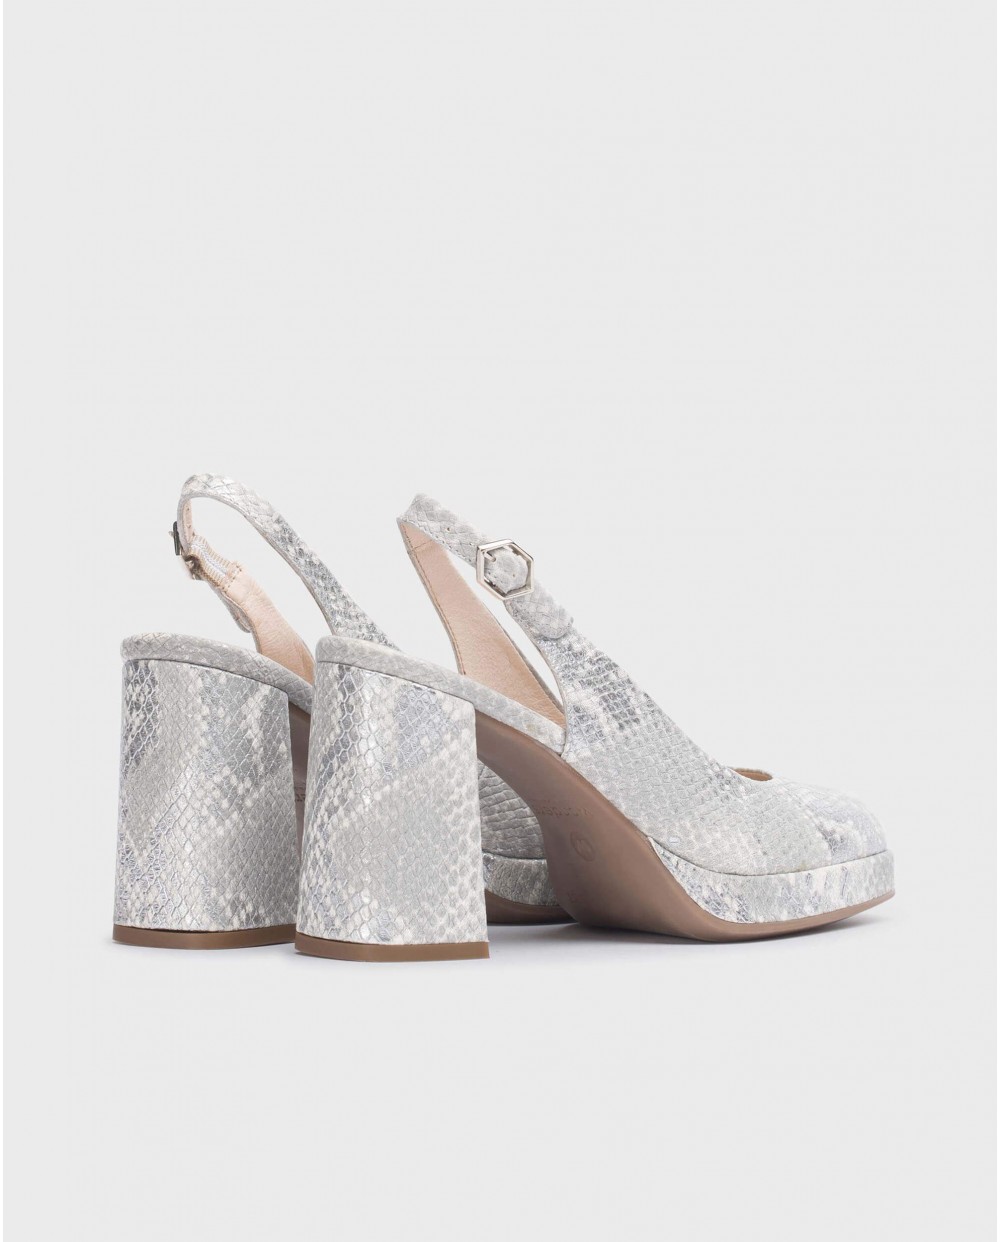 Wonders-Heels-CAPTAIN Silver shoe